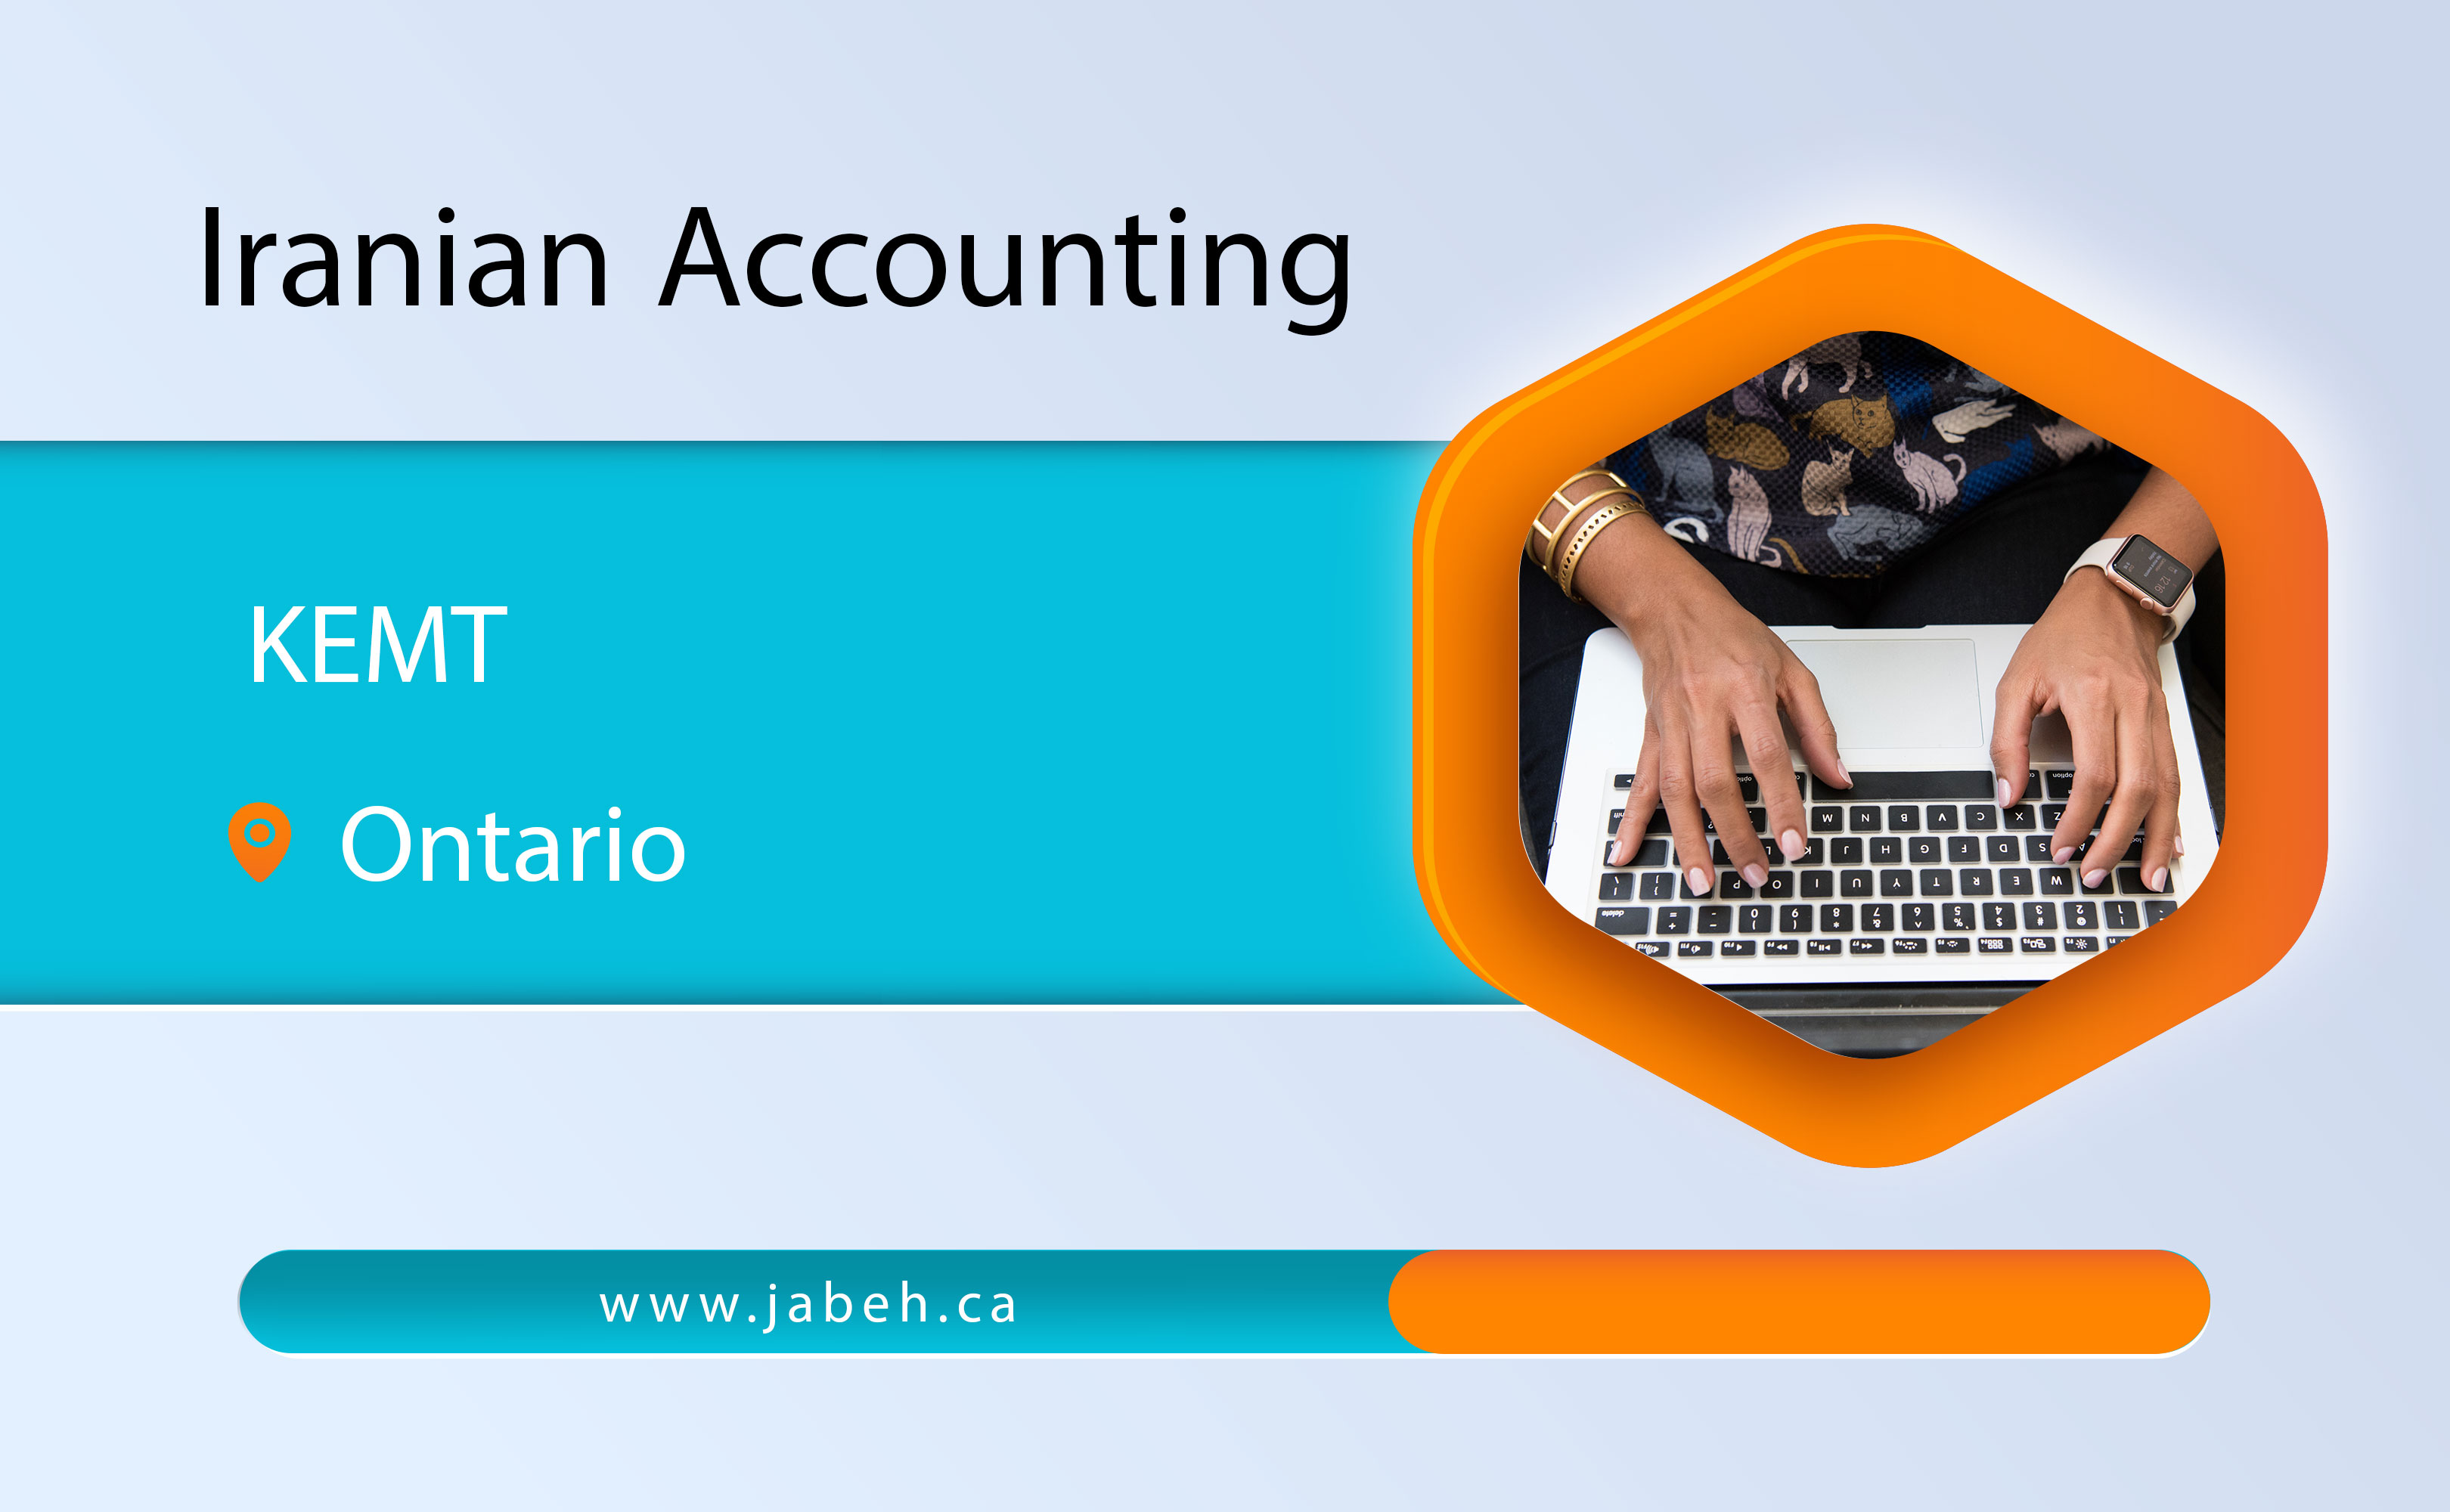 Iranian accounting company KEMT in Ontario